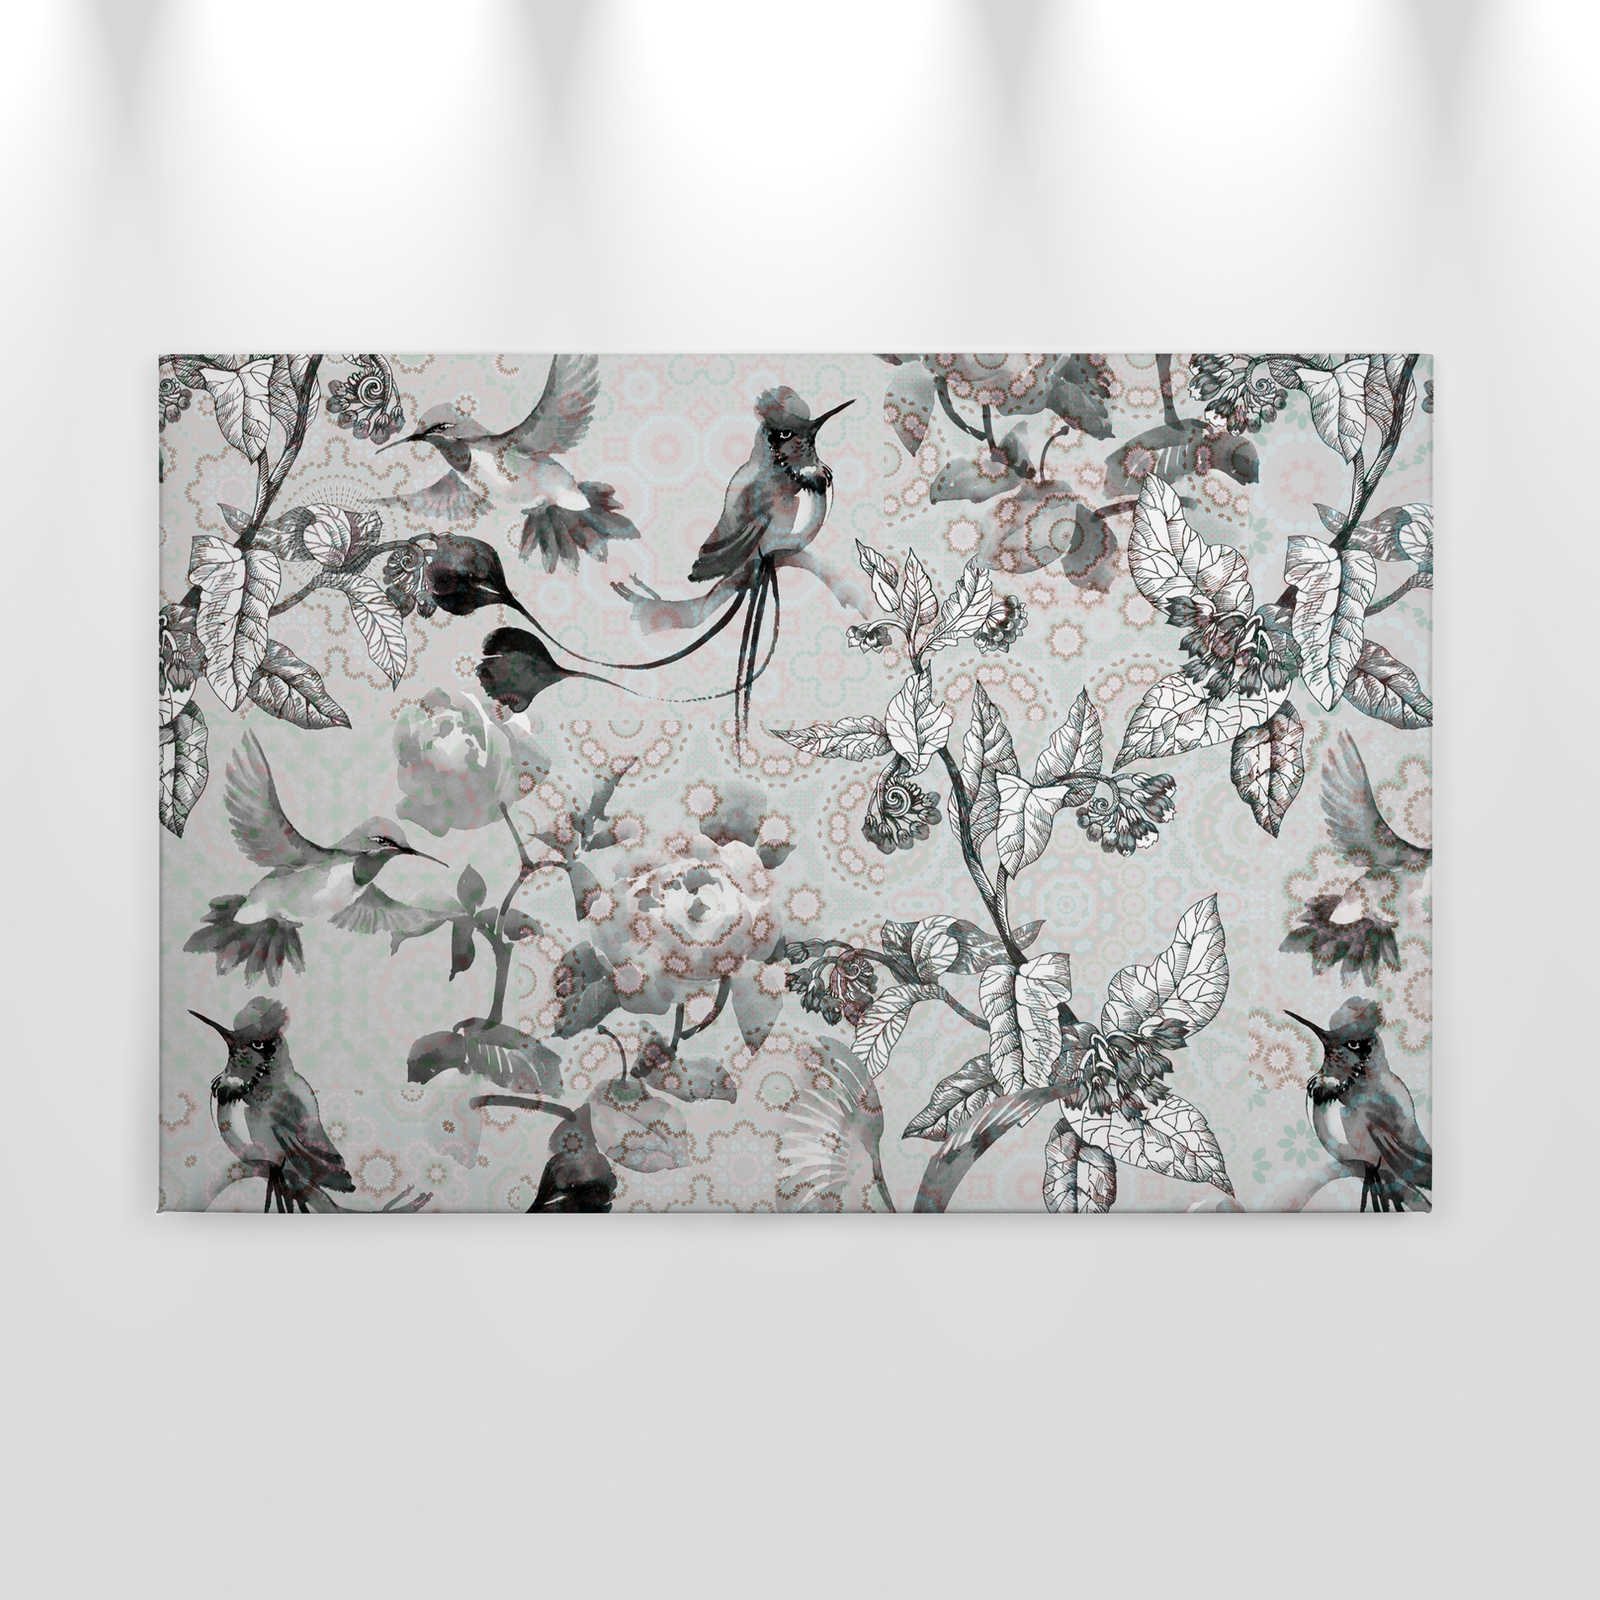             Cuadro Naturaleza Diseño en estilo collage | mosaico exótico 4 - 0,90 m x 0,60 m
        